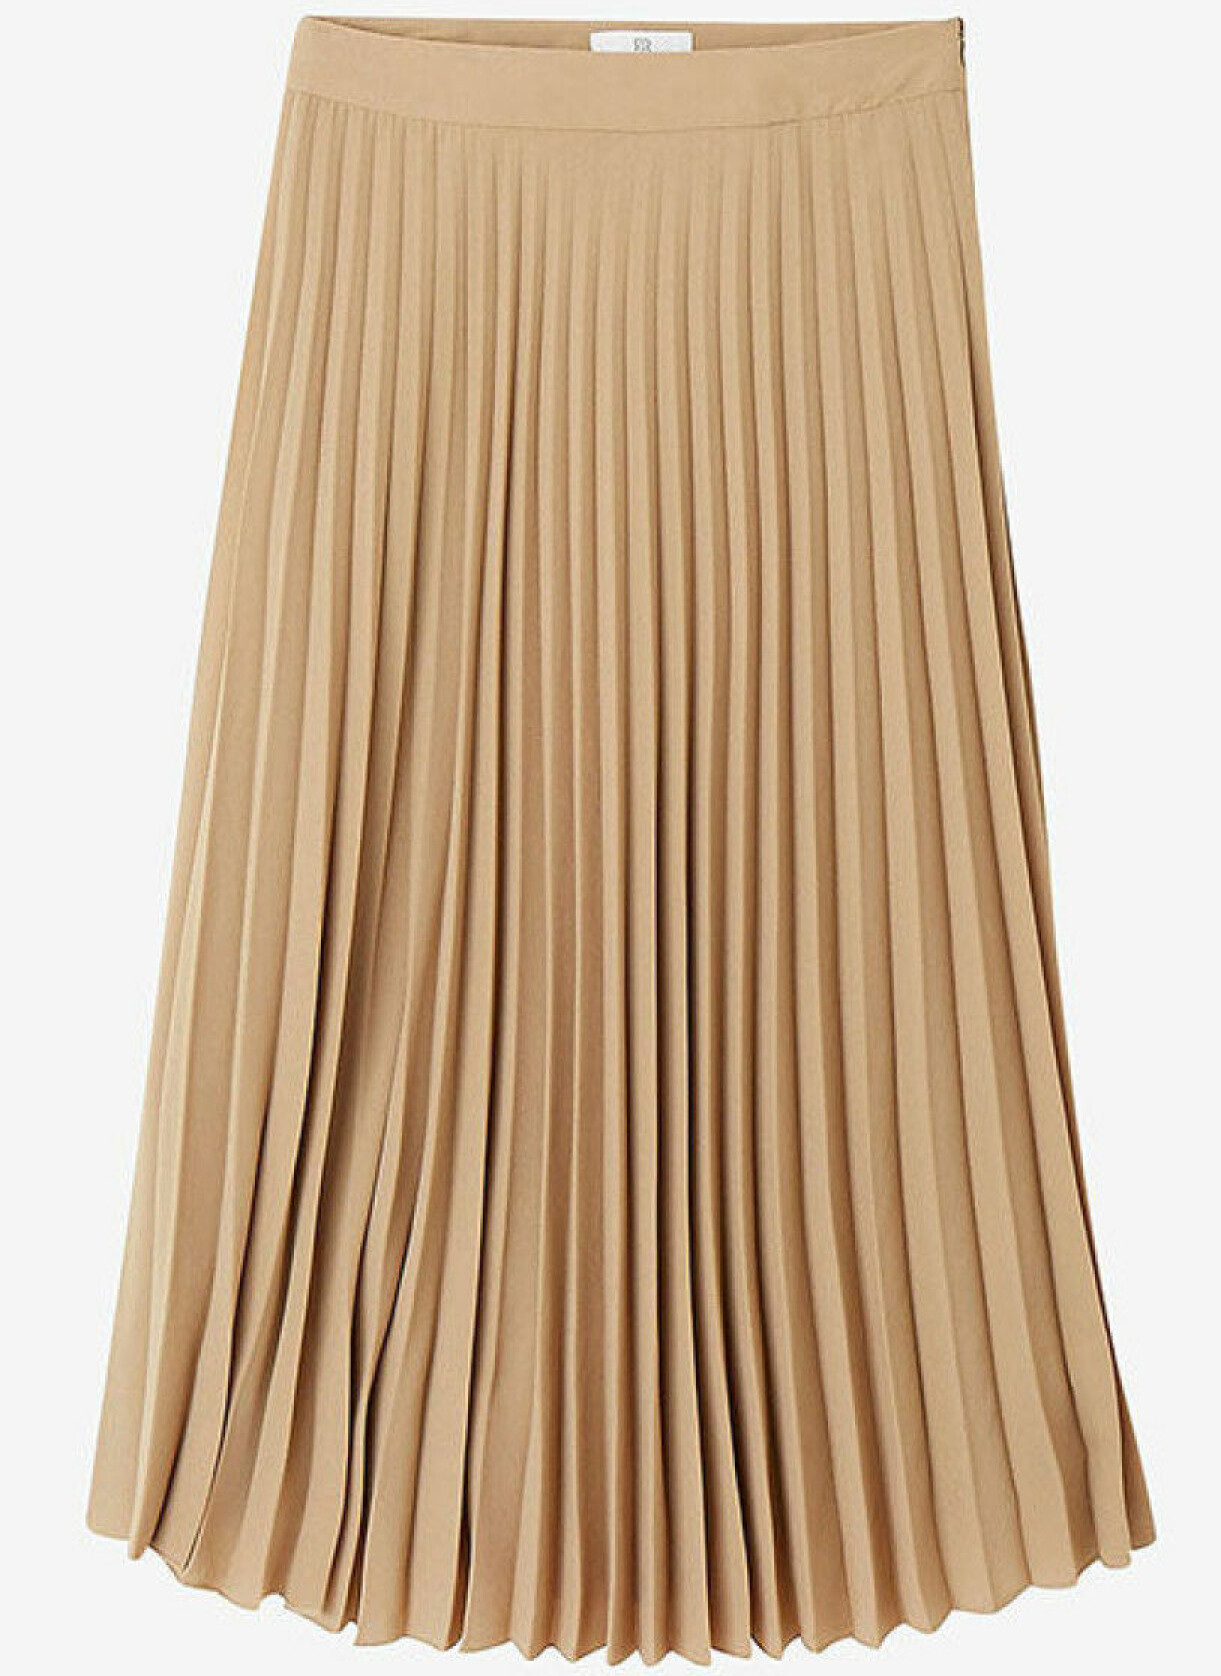 Beige plisserad kjol från La Redoute Collection.